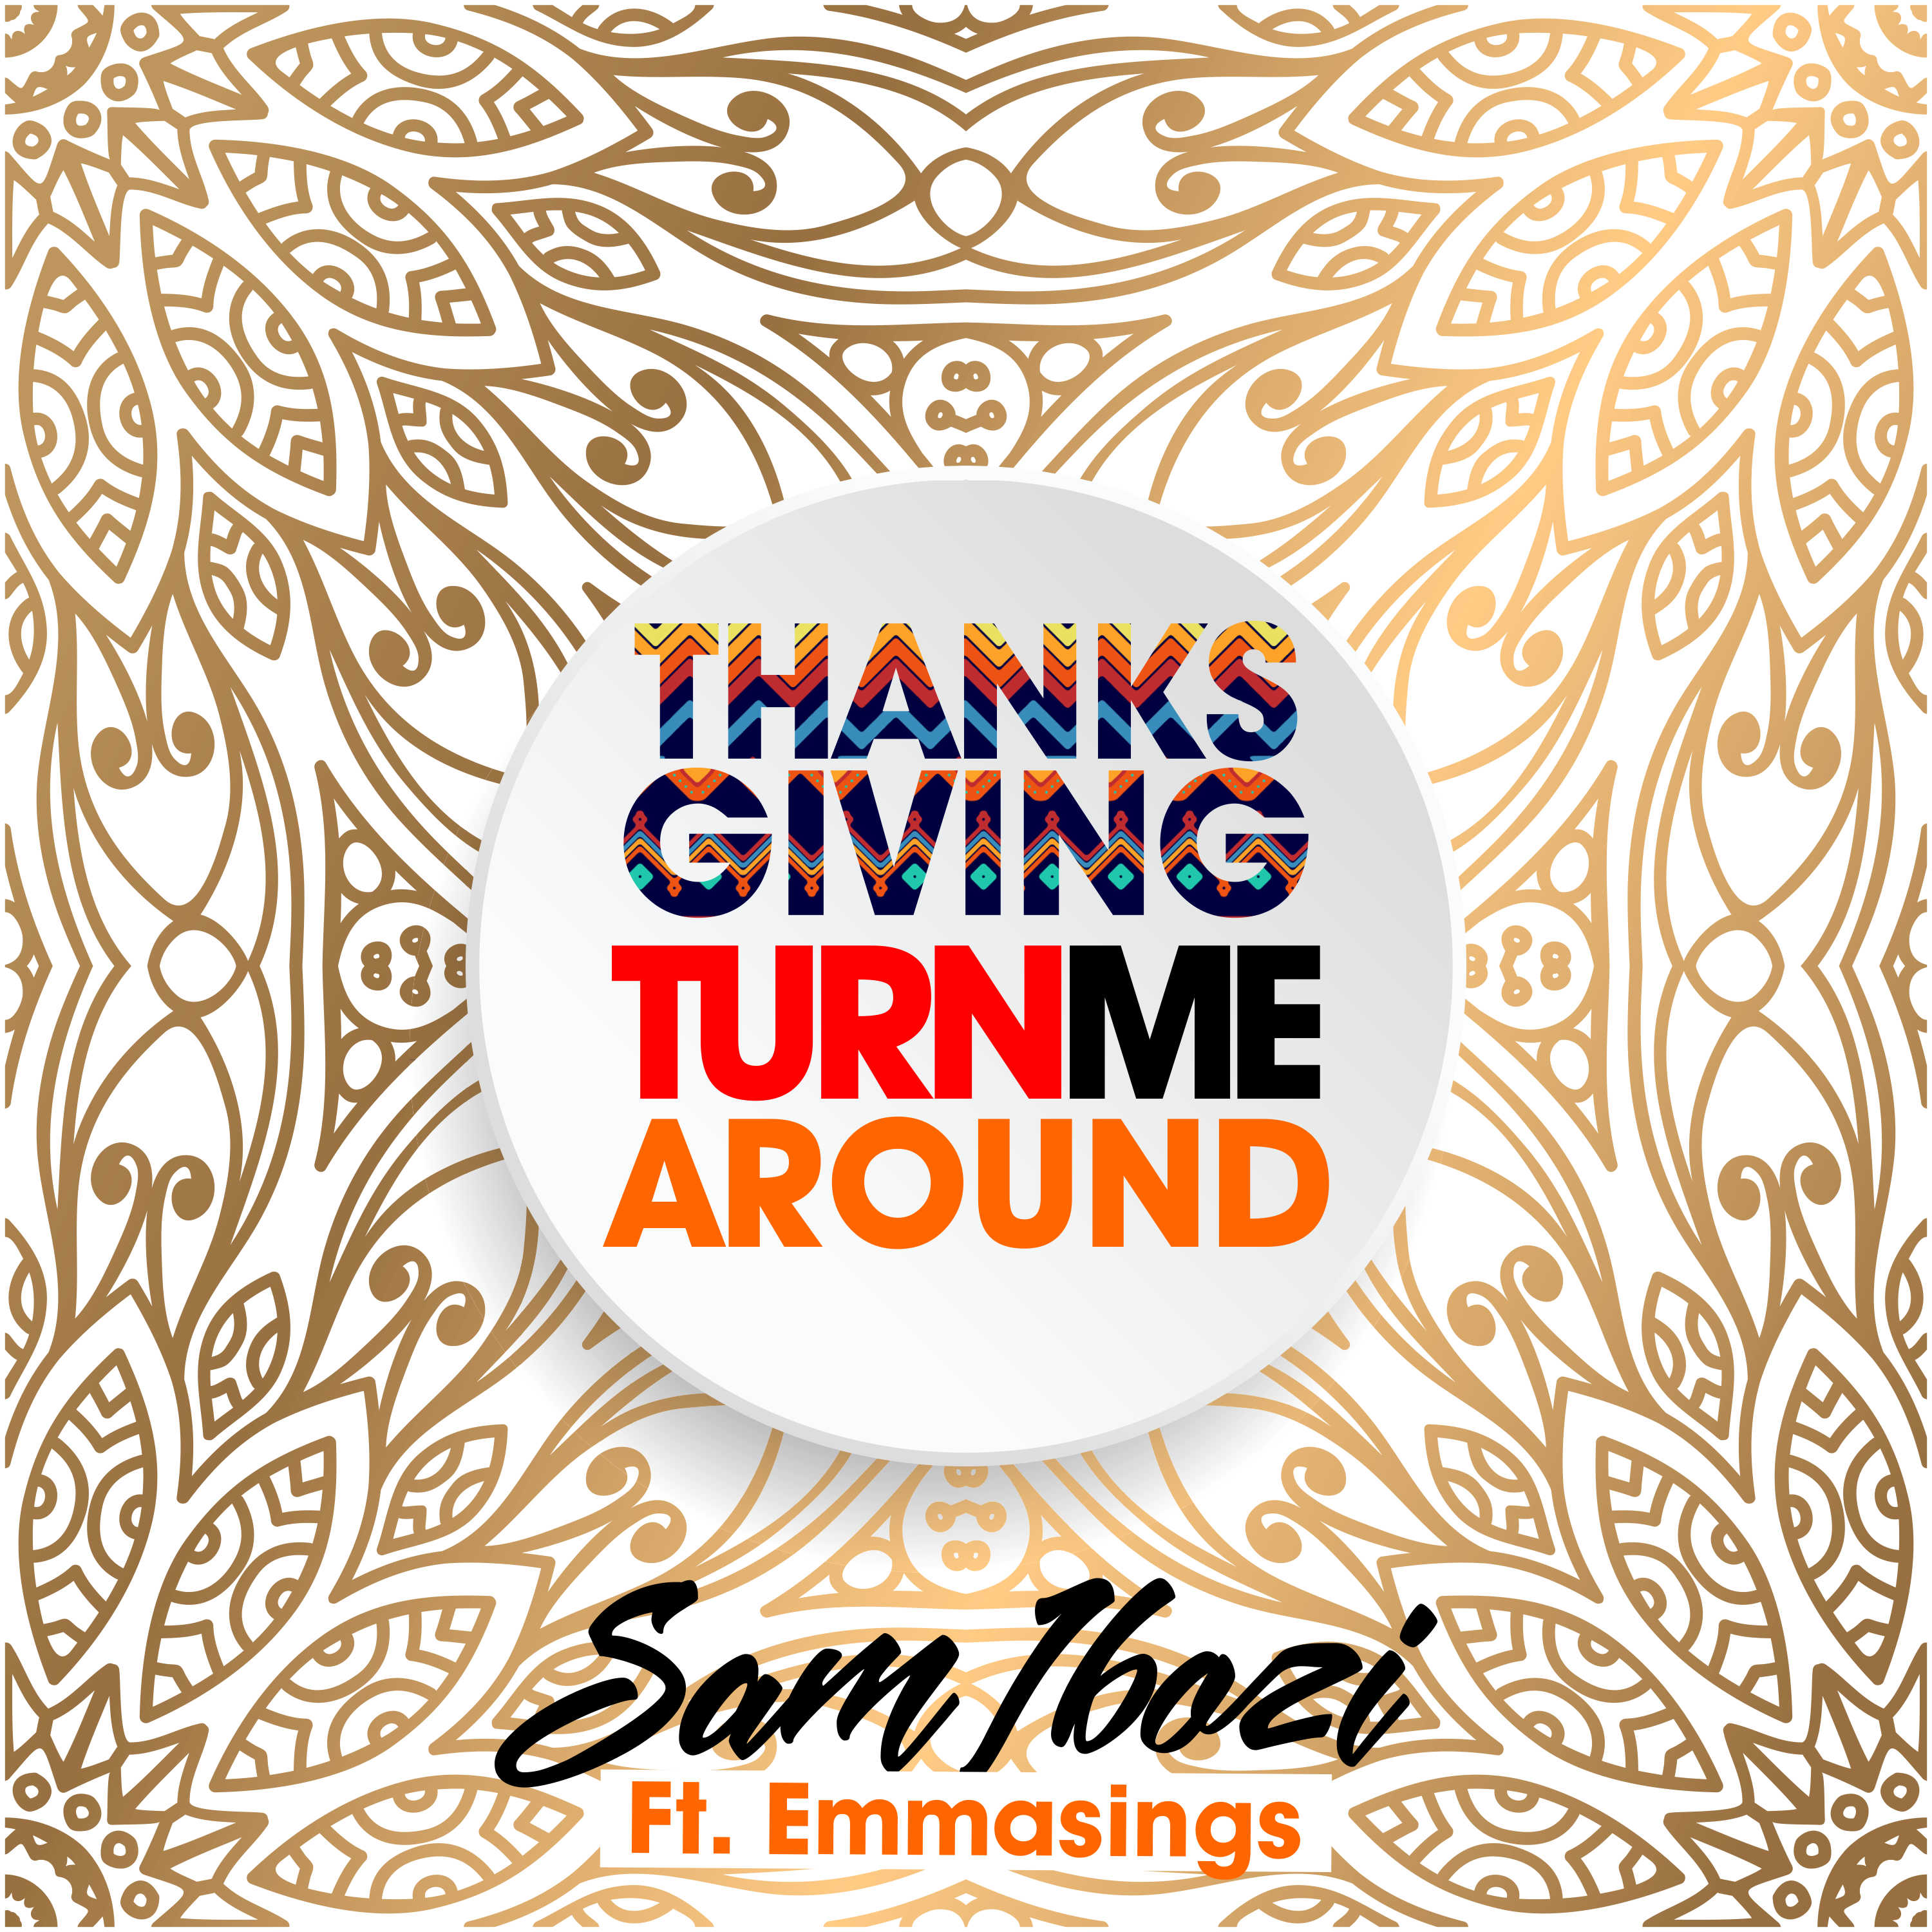 Turn me around - Sam Ibozi